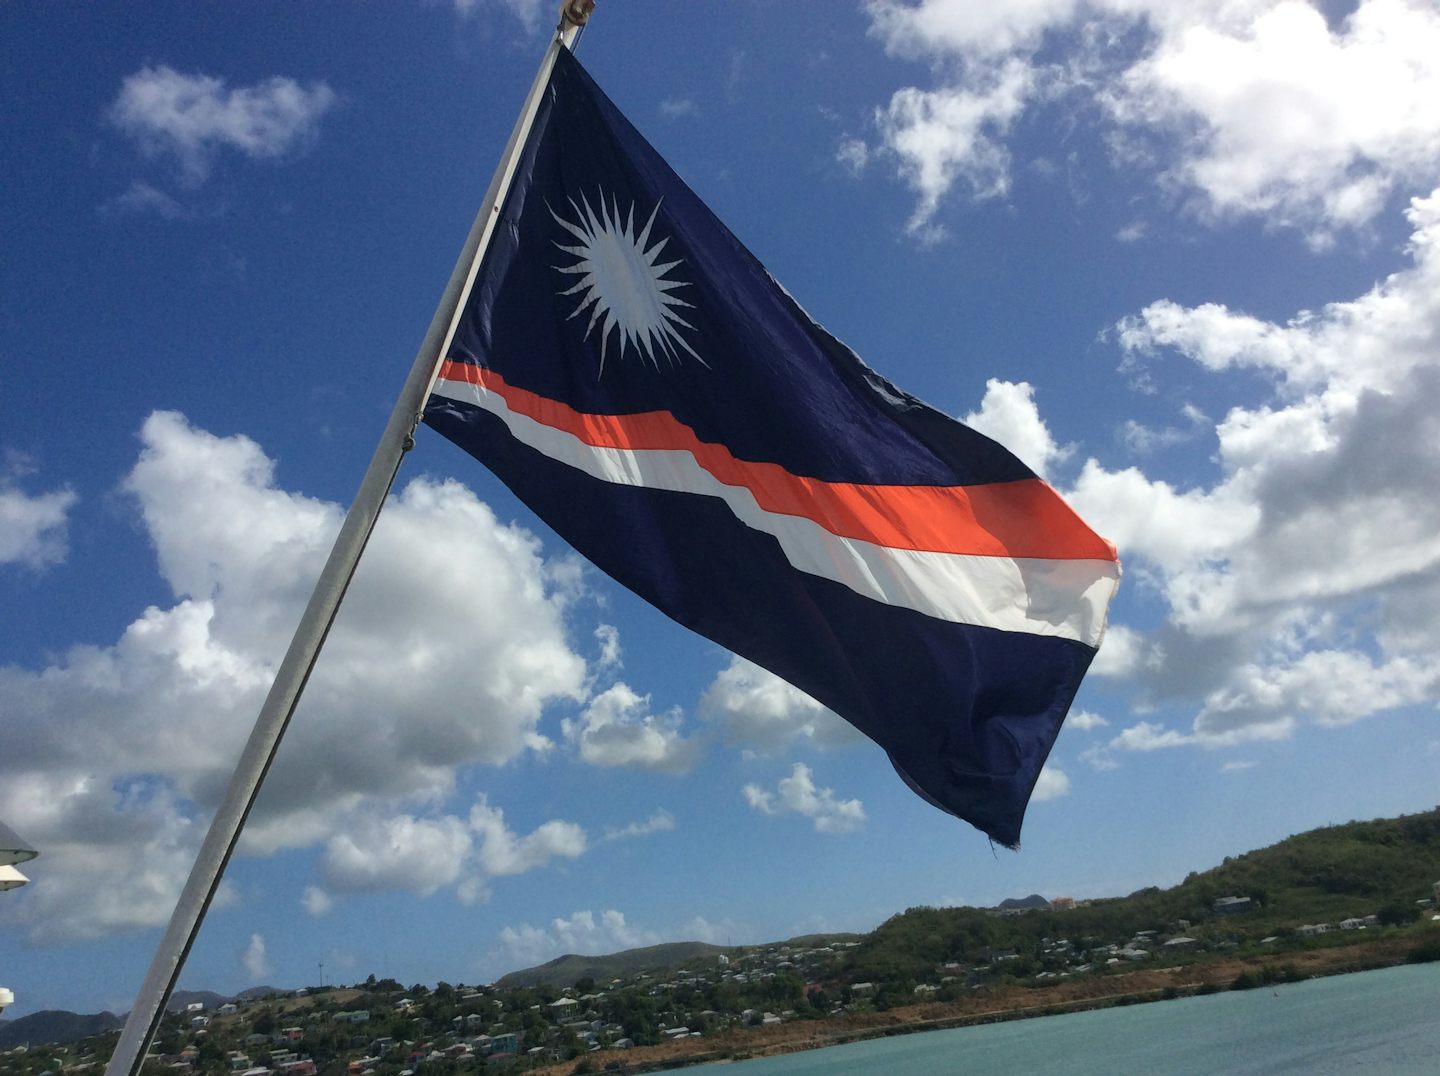 The ships registry flag....Marshall Islands